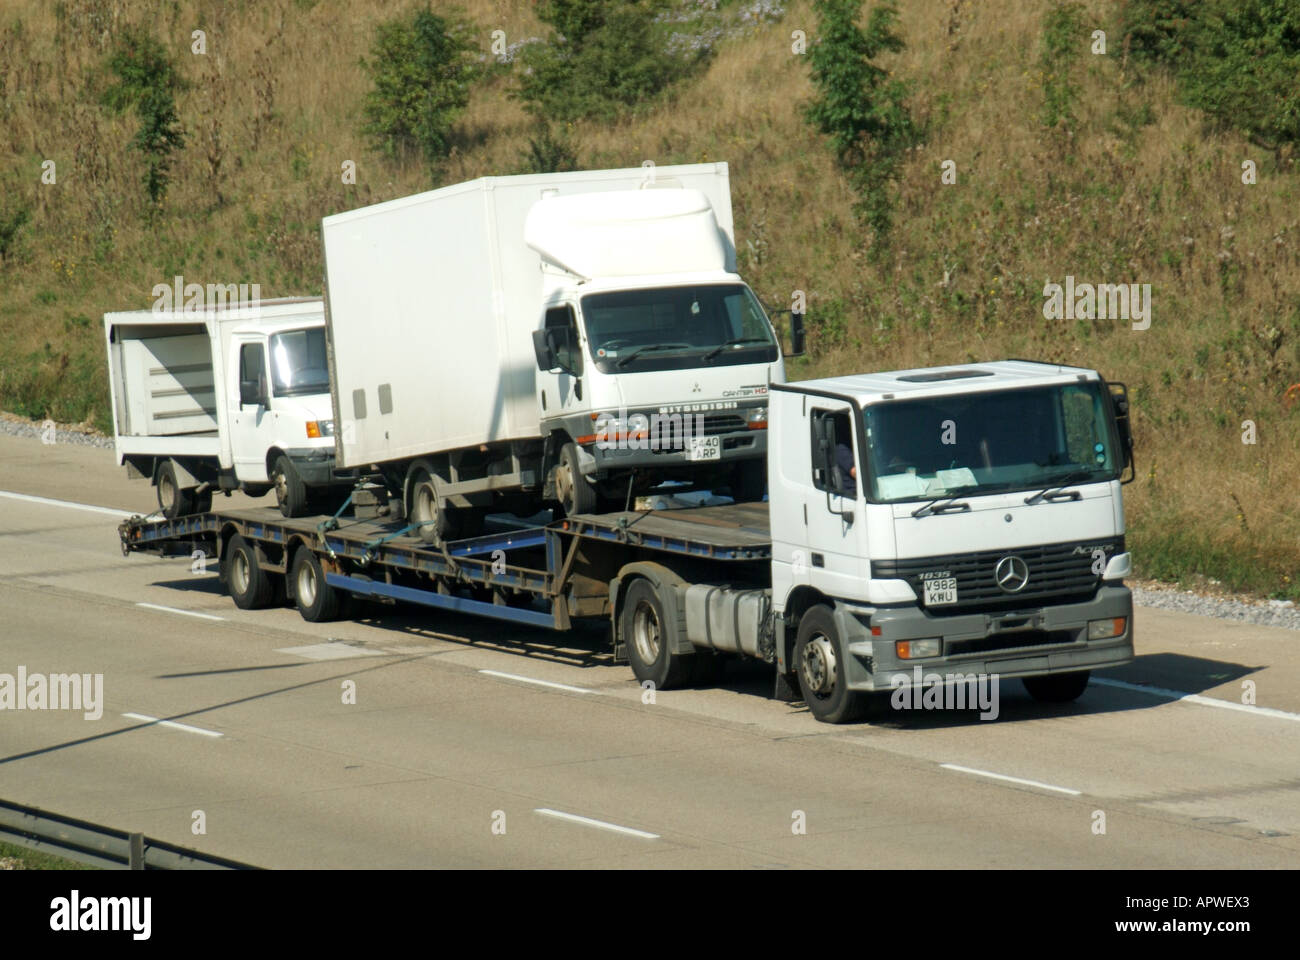 M25 motorway unmarked white low loader transporting large van and milk float Stock Photo